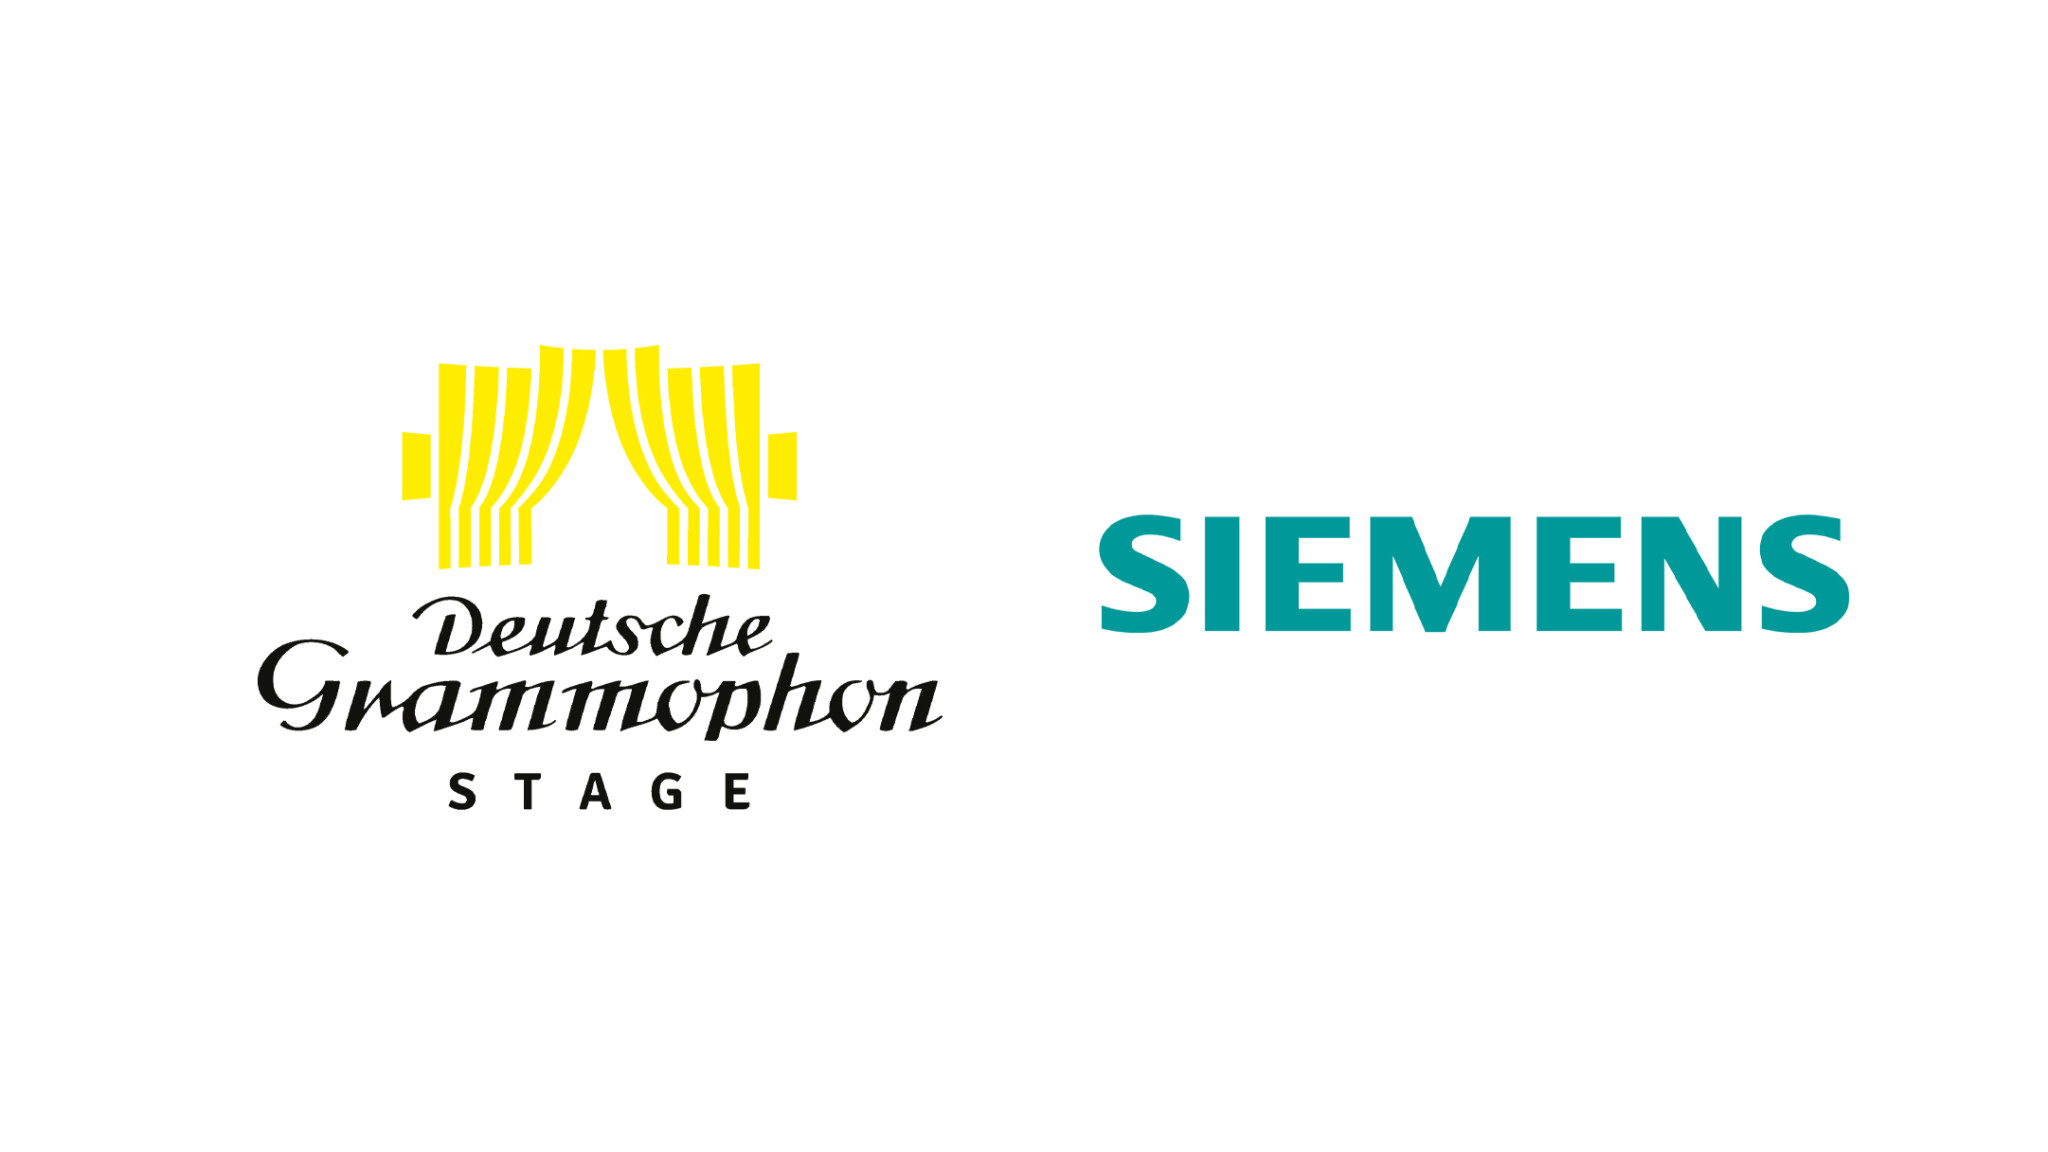 DG/Siemens Partnership News DG STAGE